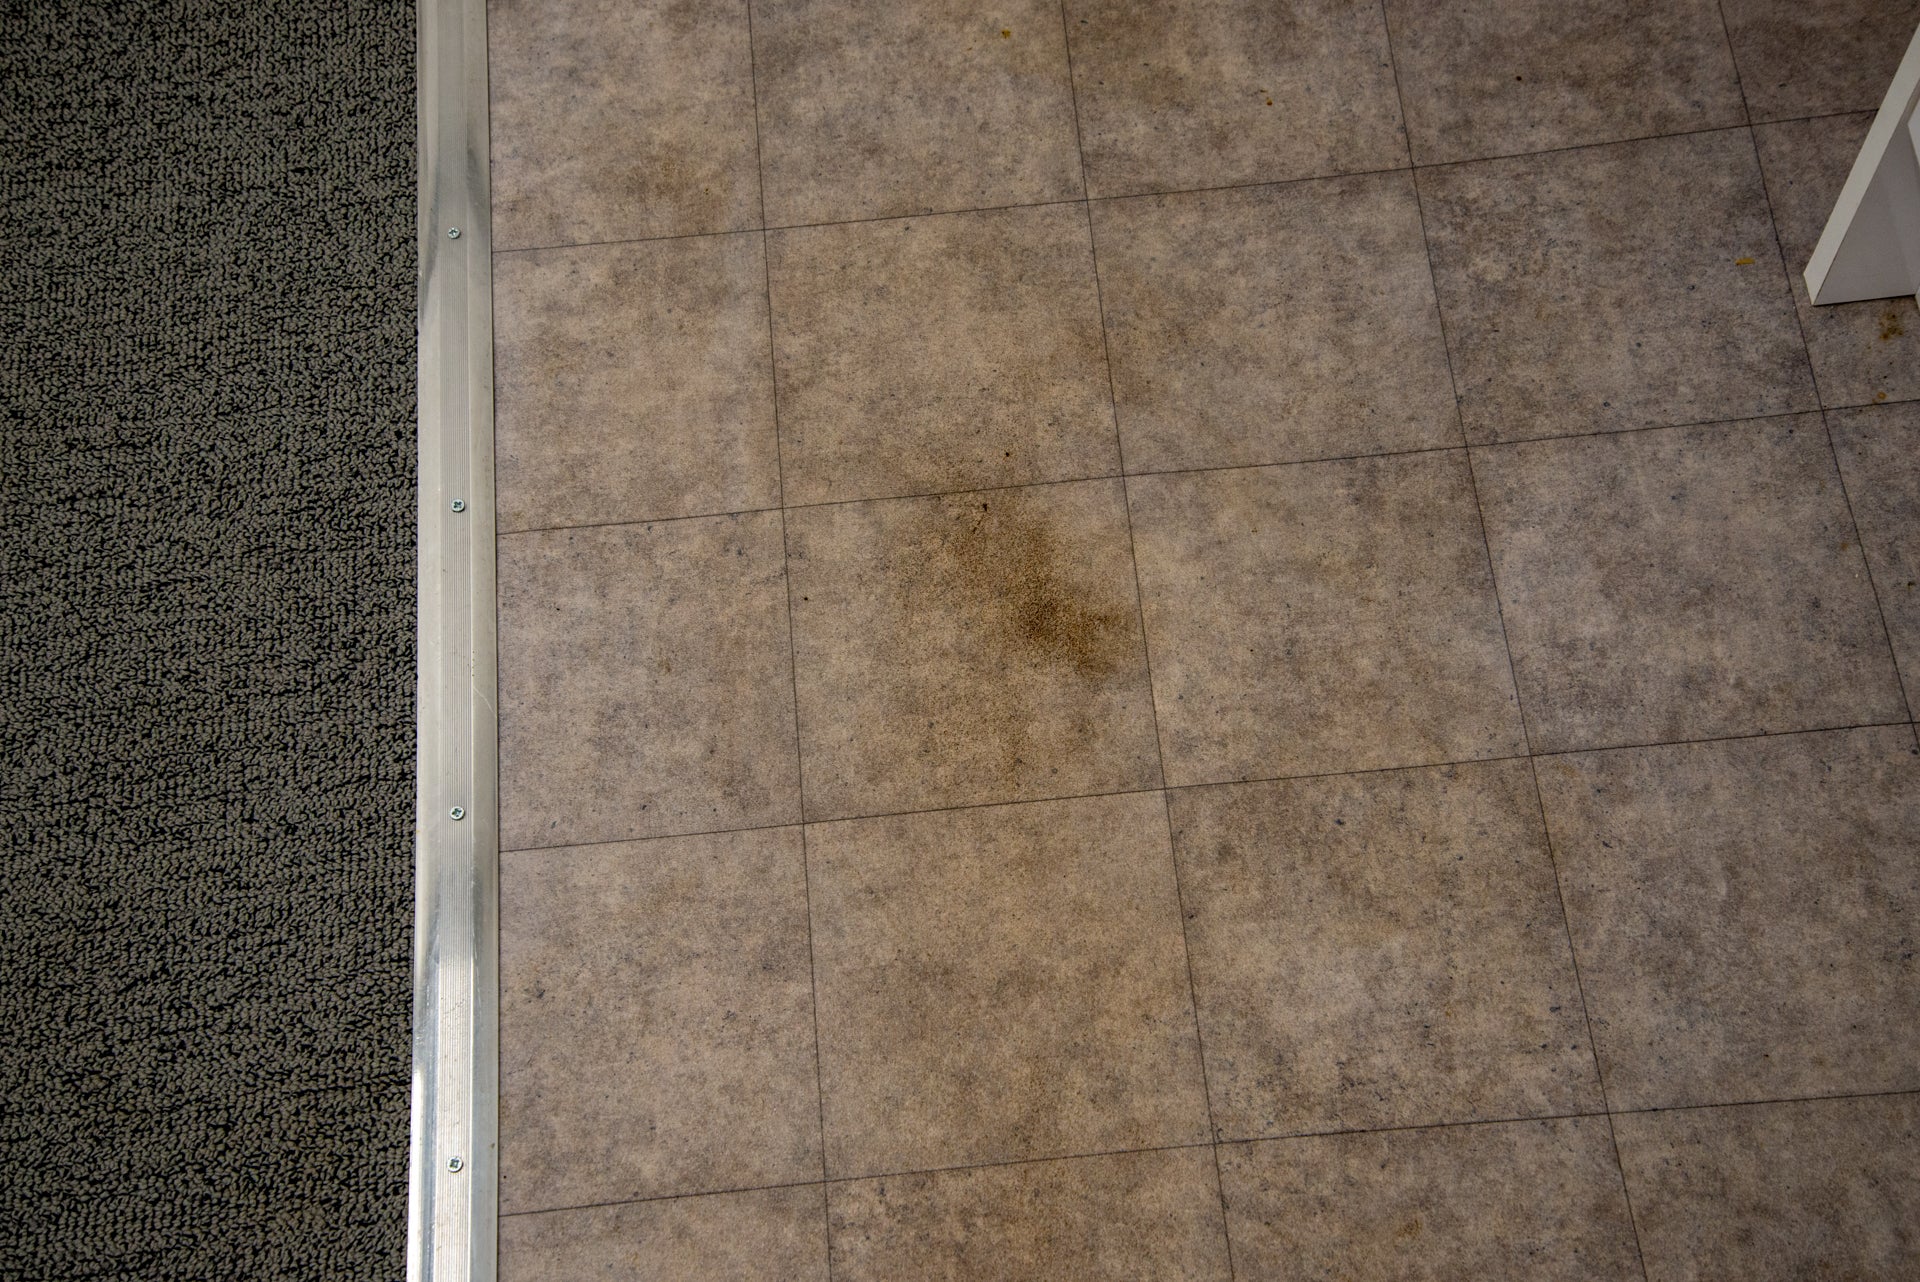 Proscenic P11 Cordless Vacuum Cleaner mopped hard floor